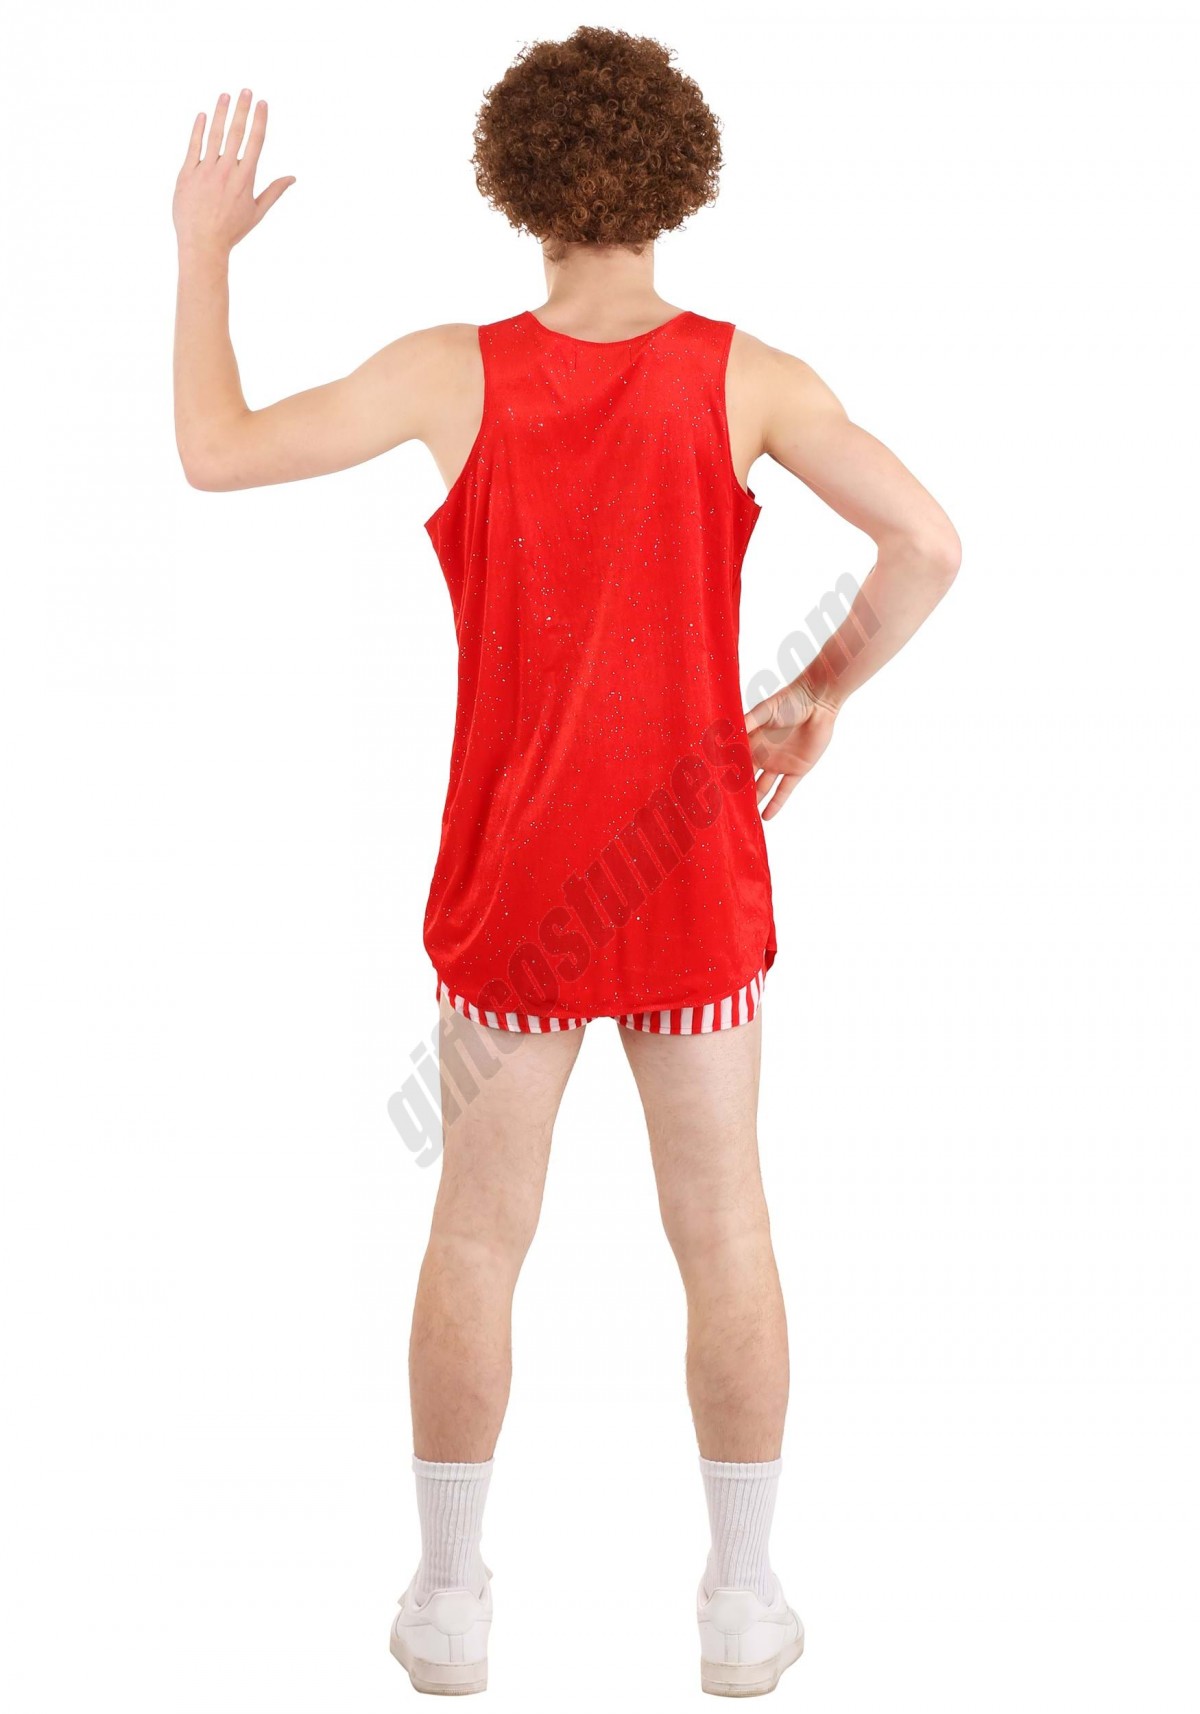 Richard Simmons Adult Costume - Men's - -1